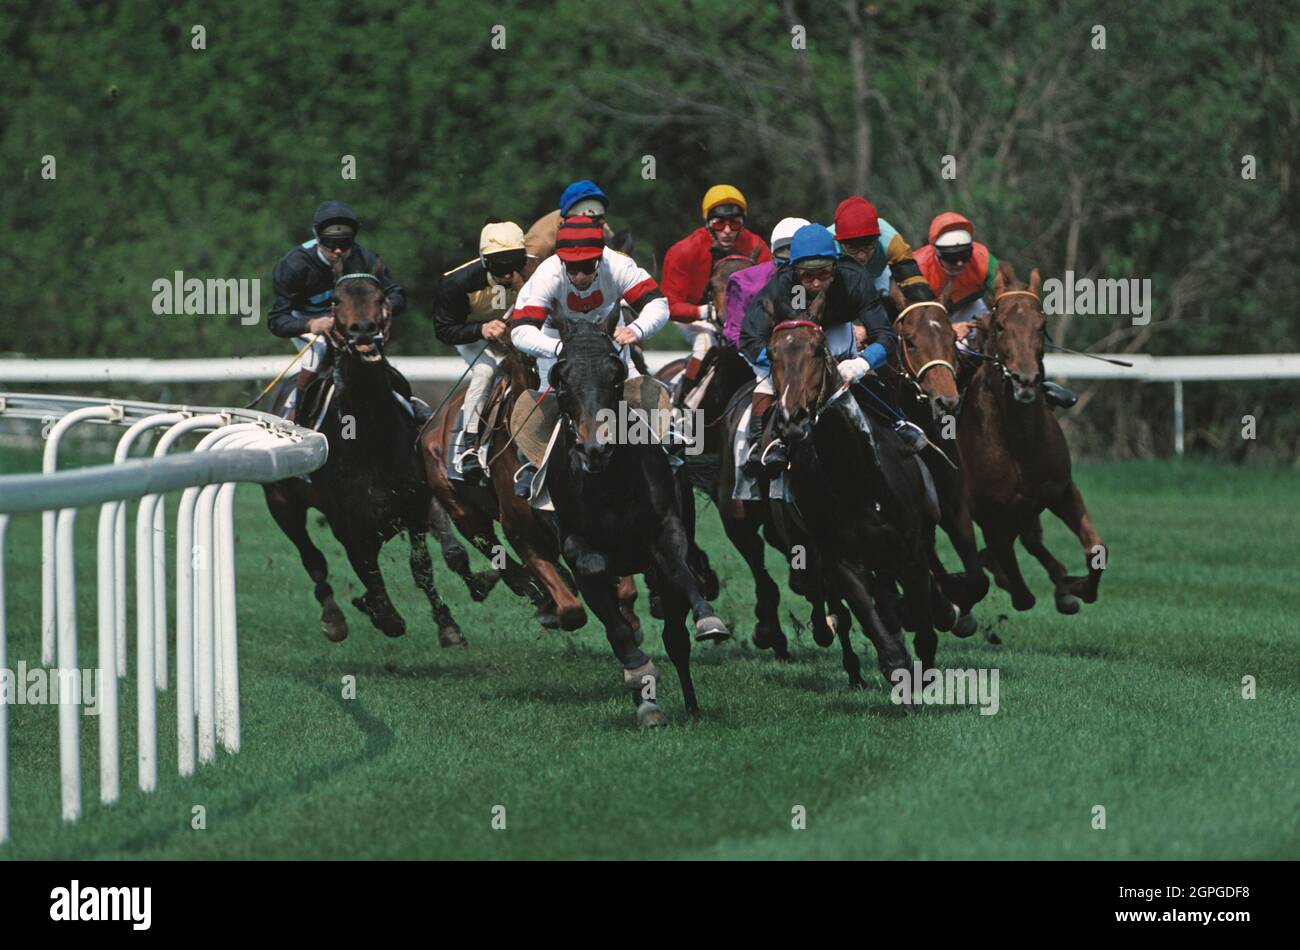 Sport. Horse racing on turf. Stock Photo